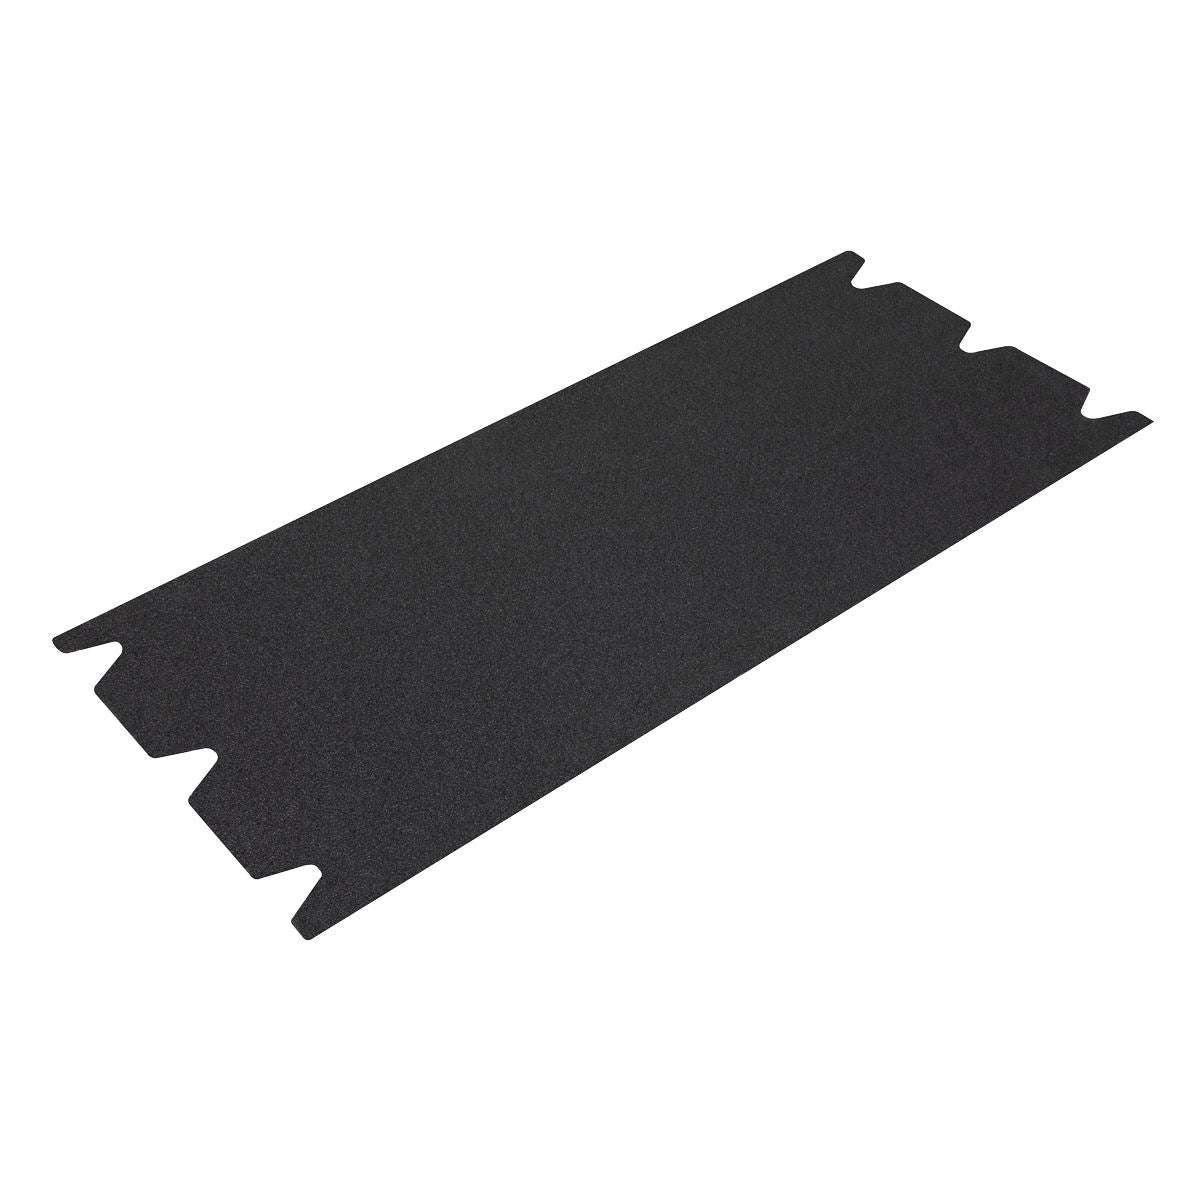 Sealey Floor Sanding Sheet 203 x 495mm 100Grit - Pack of 25